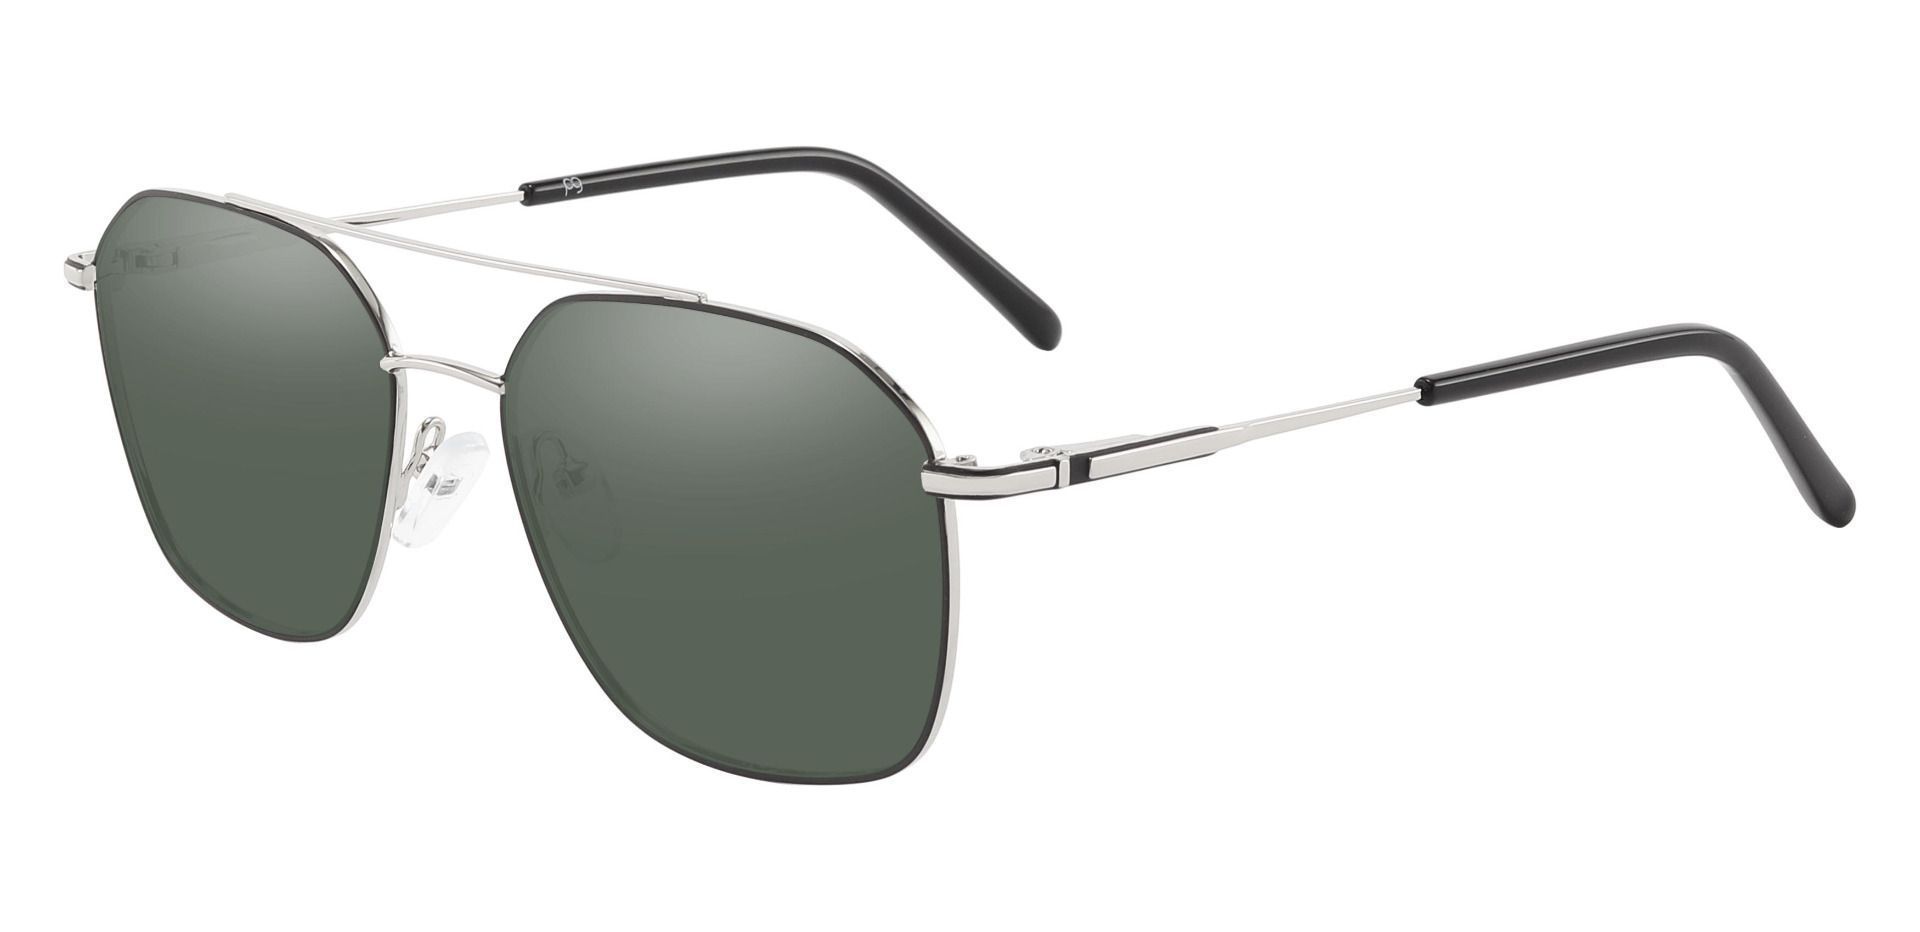 Harvey Aviator Non-Rx Sunglasses - Silver Frame With Green Lenses